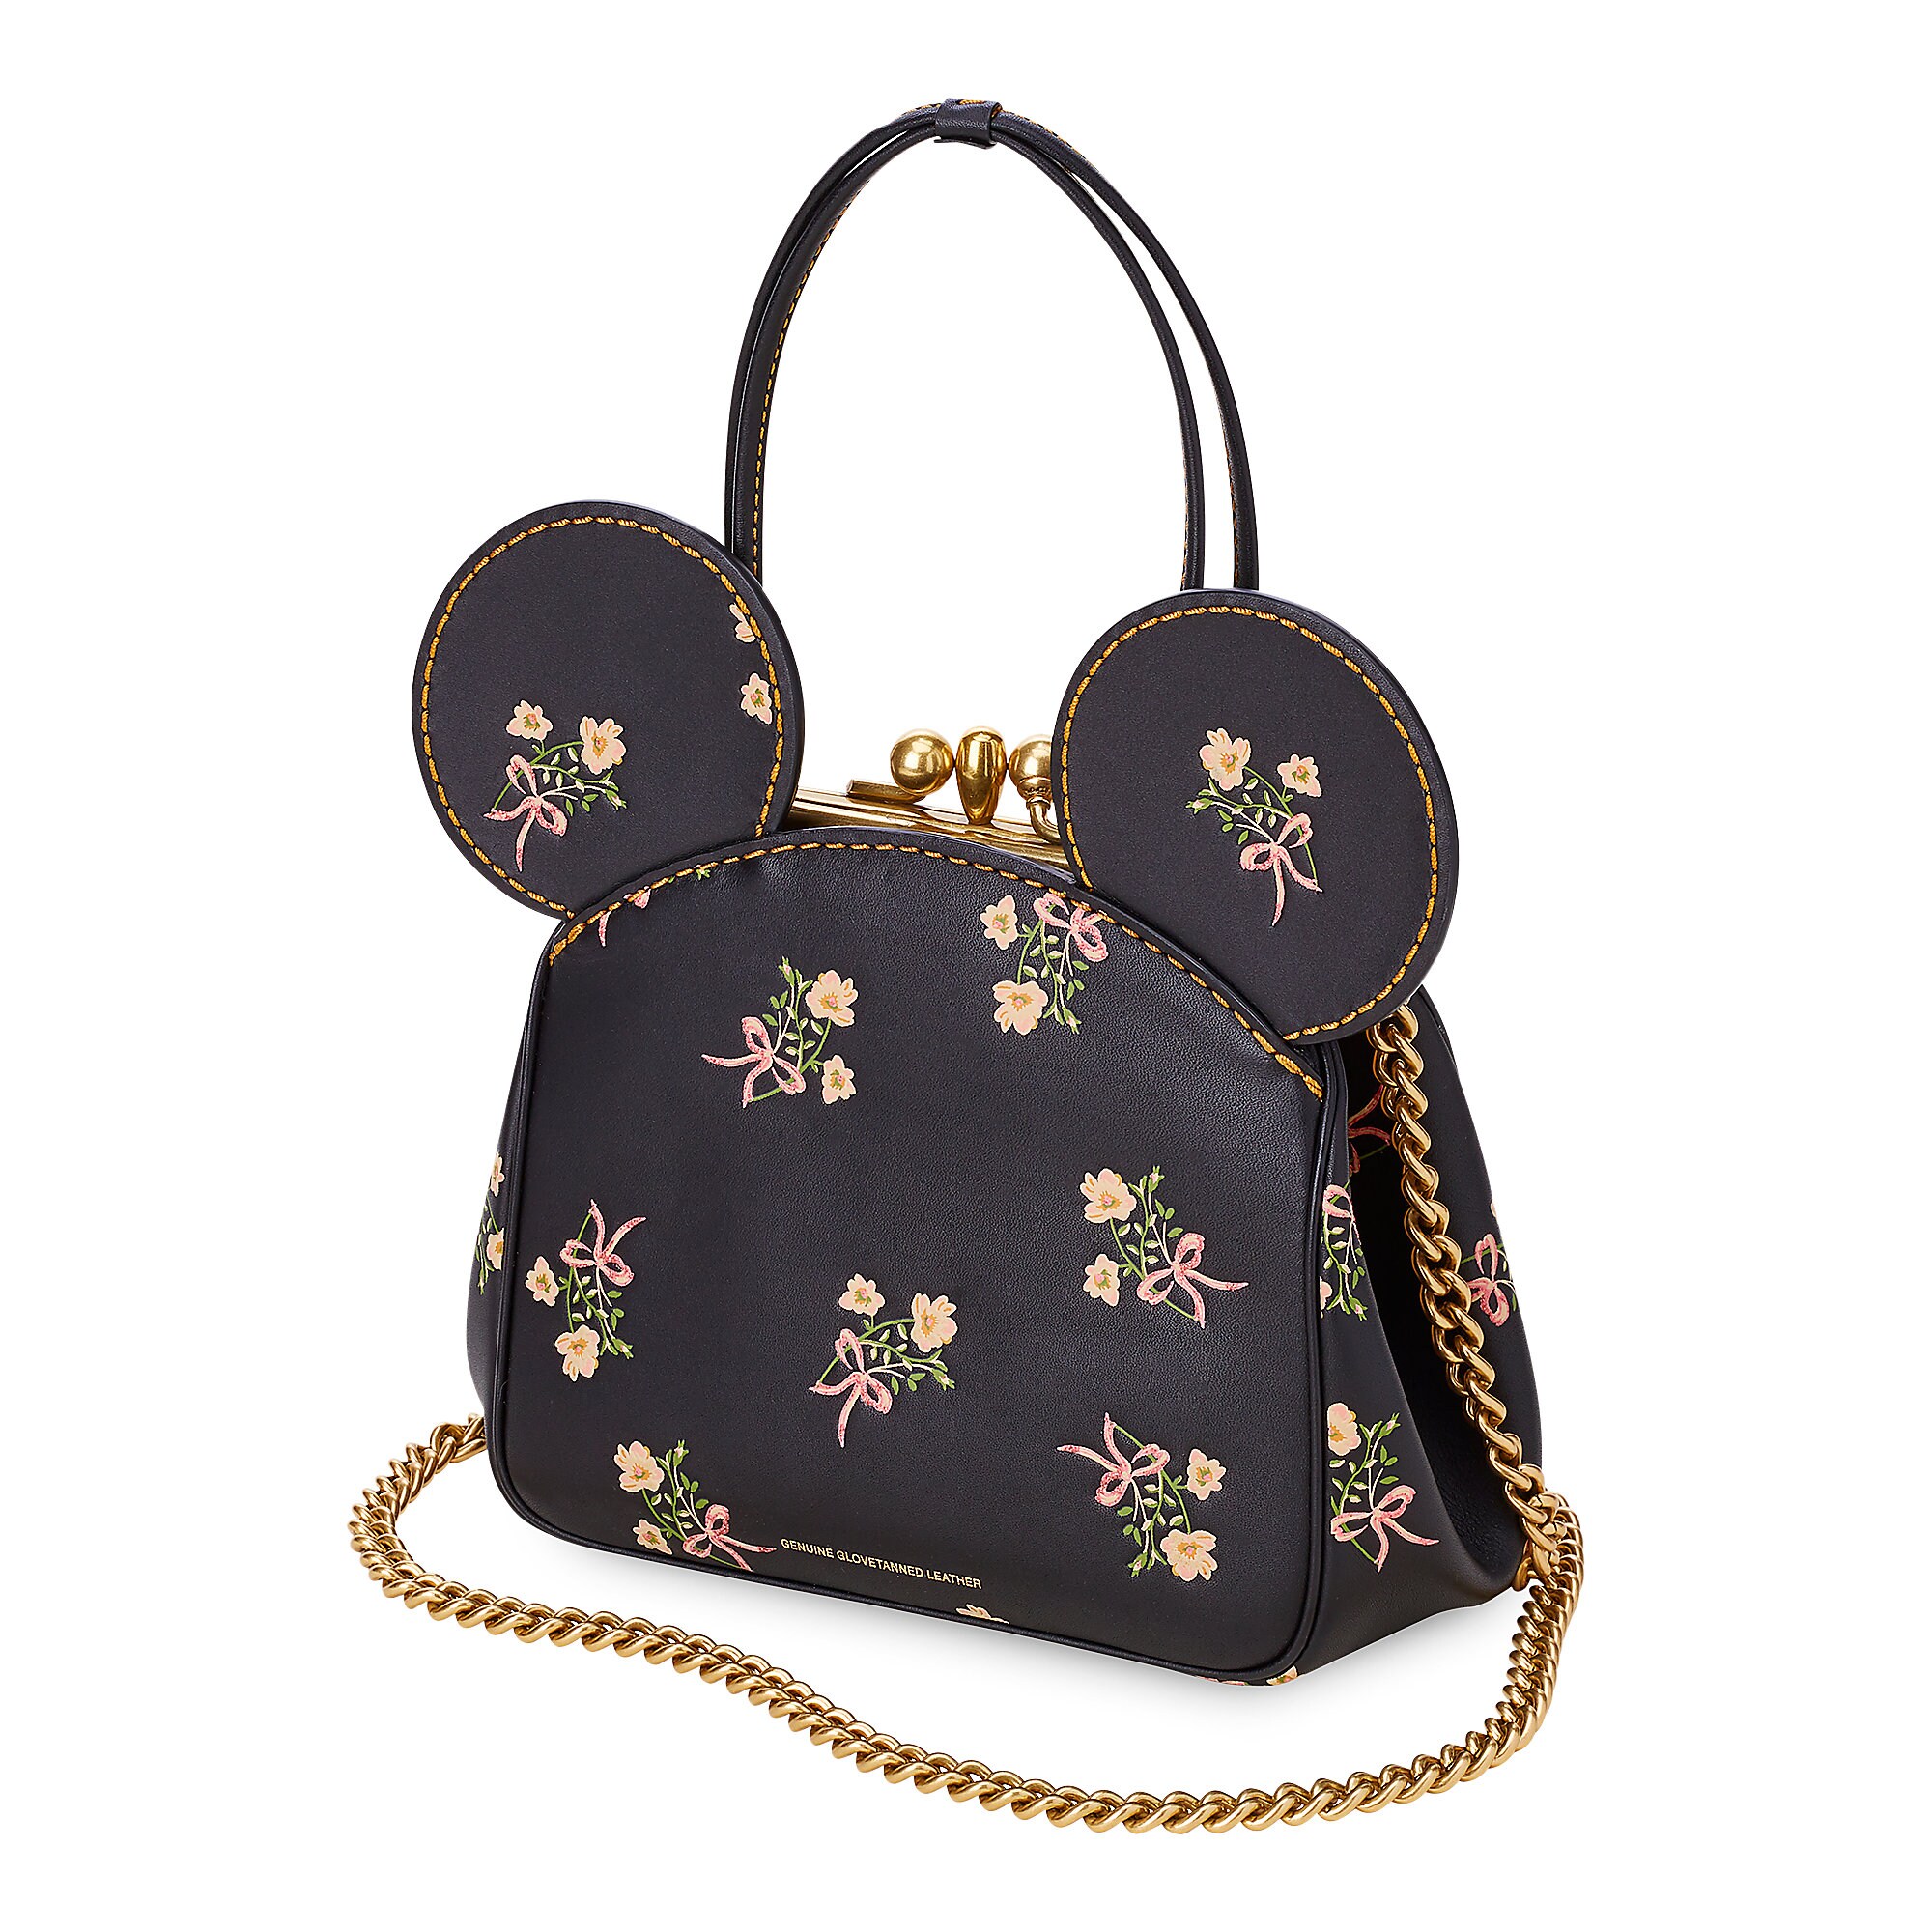 Minnie Mouse Floral Kisslock Leather Bag by COACH - Black